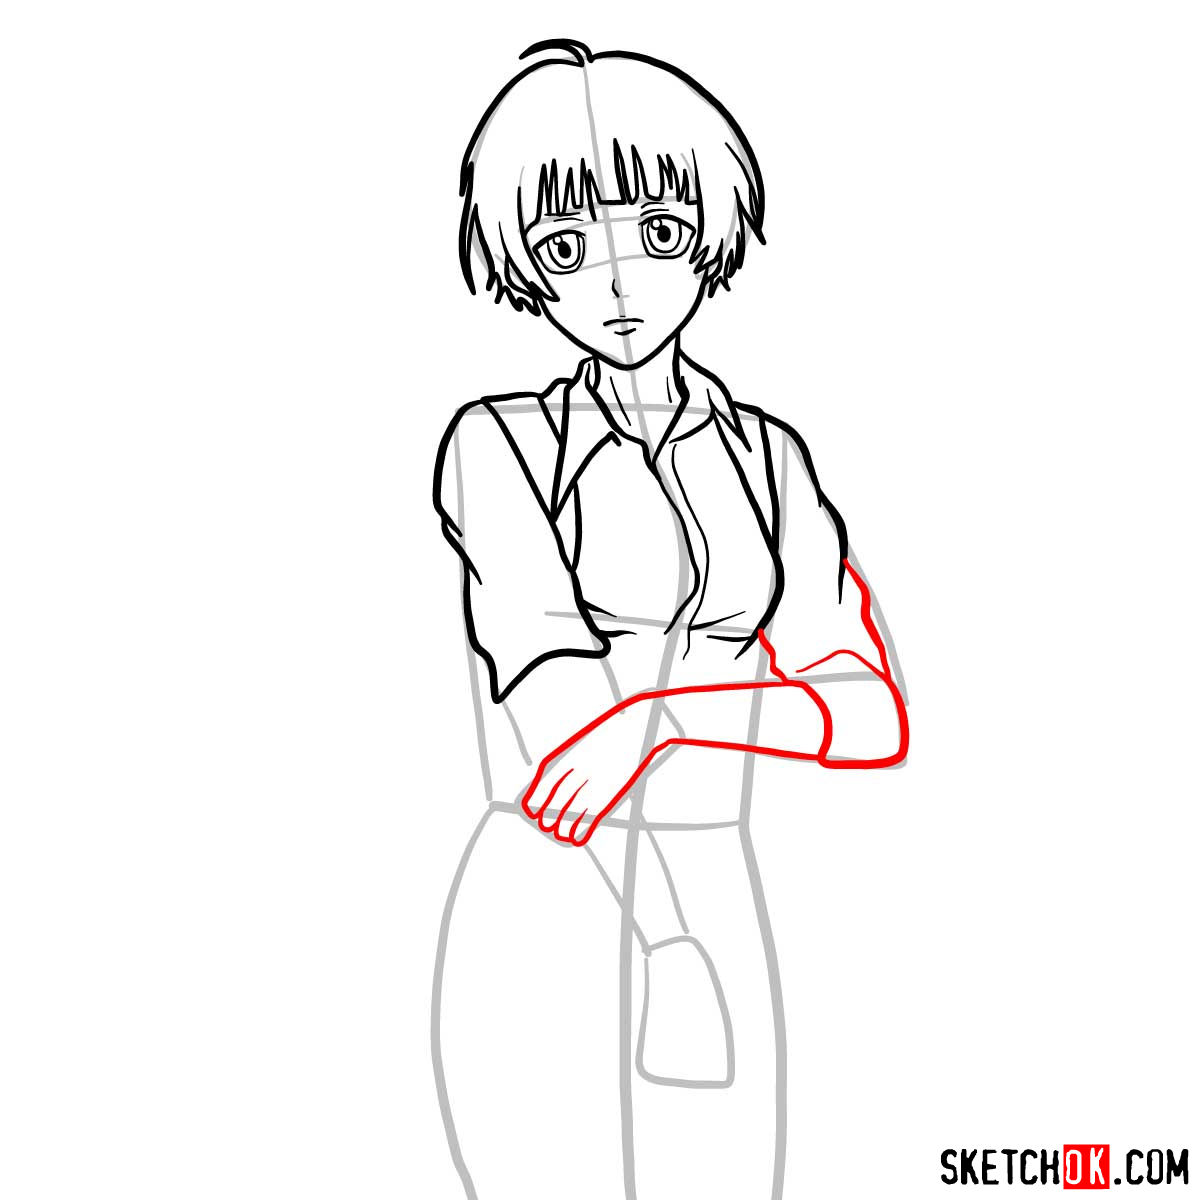 How to draw Akane Tsunemori | Psycho Pass - Sketchok easy drawing guides